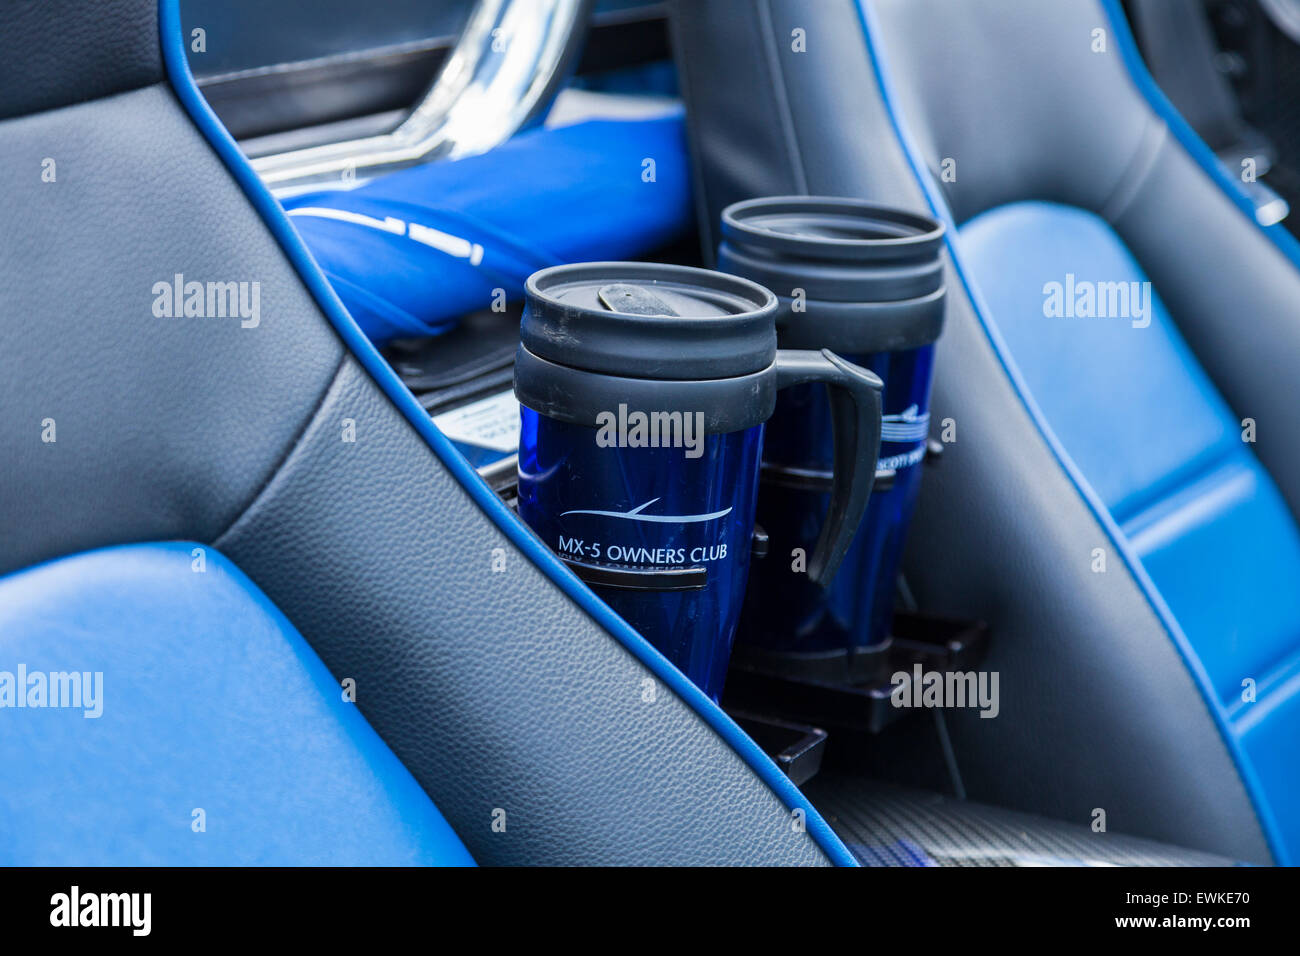 Mazda MX5 car displaying drinking mugs labeled Mazda Owners Club Stock Photo